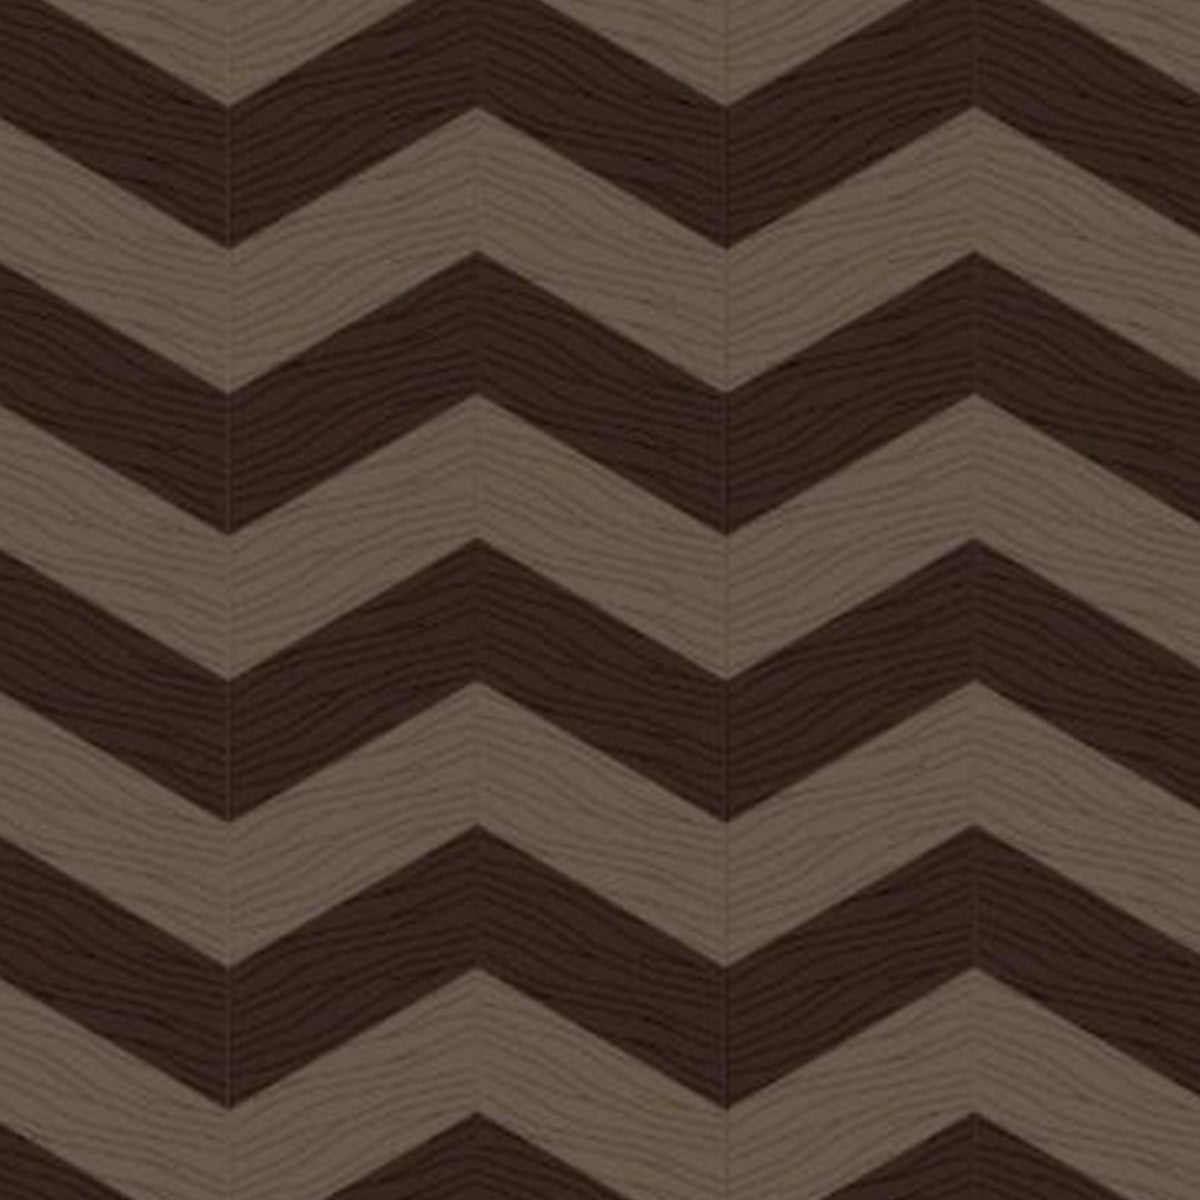 Bisazza Wood Collection, Bisazza Design Studio 'Prometeo Delta' Flooring -0